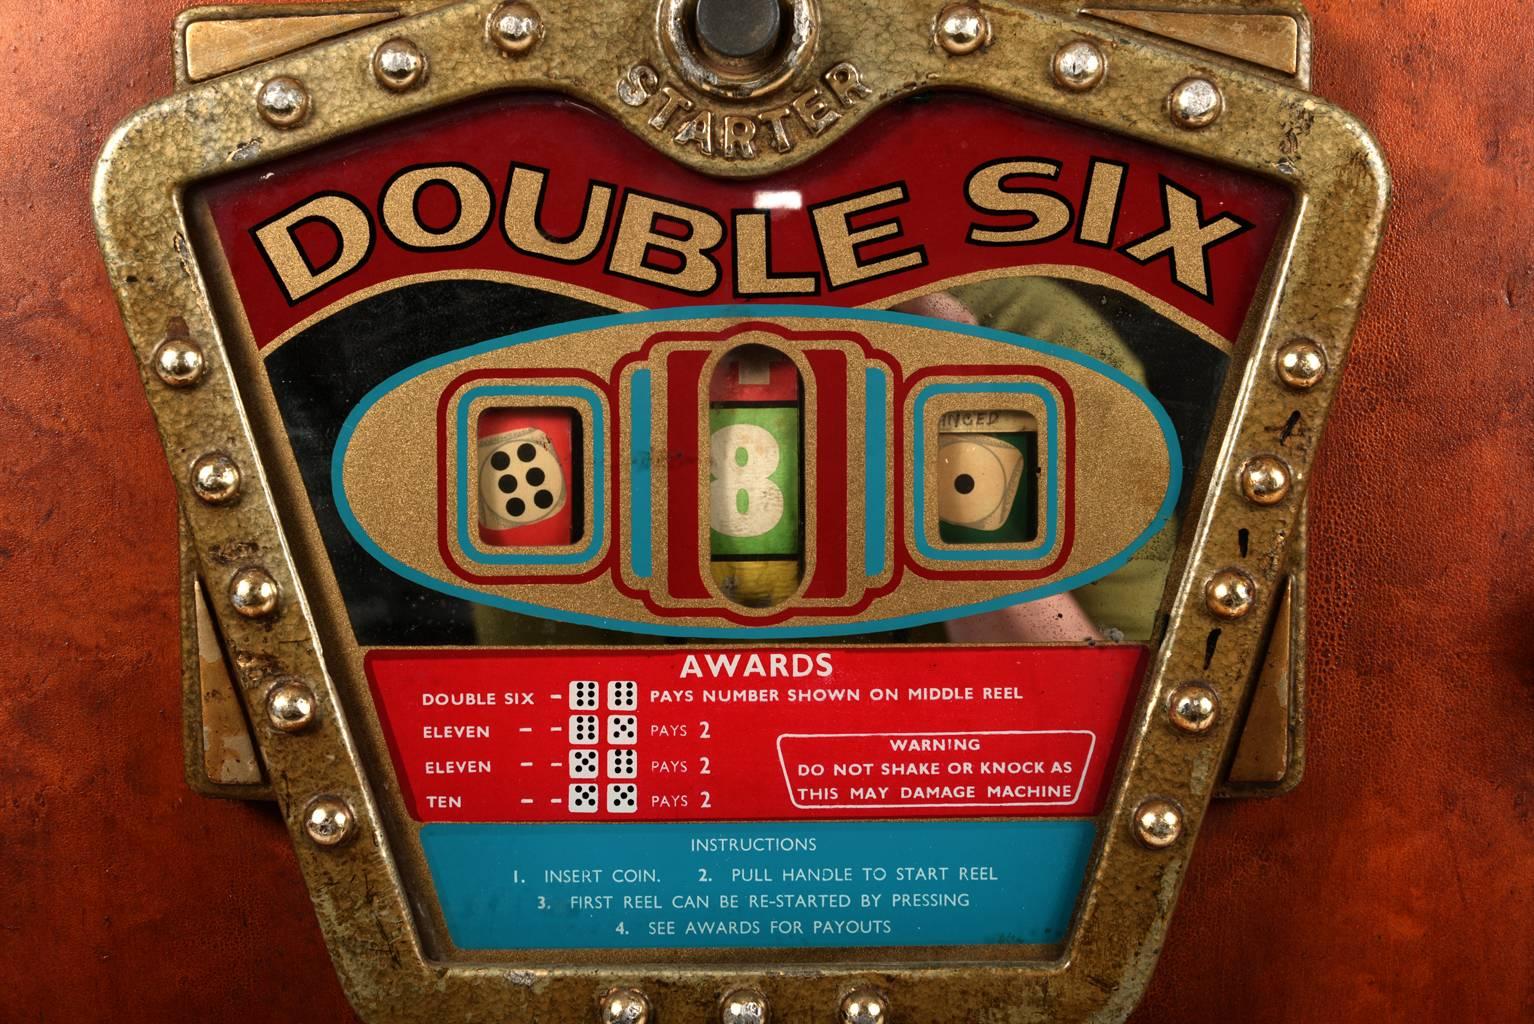 German Wall-Mounted Arcade Slot Machine